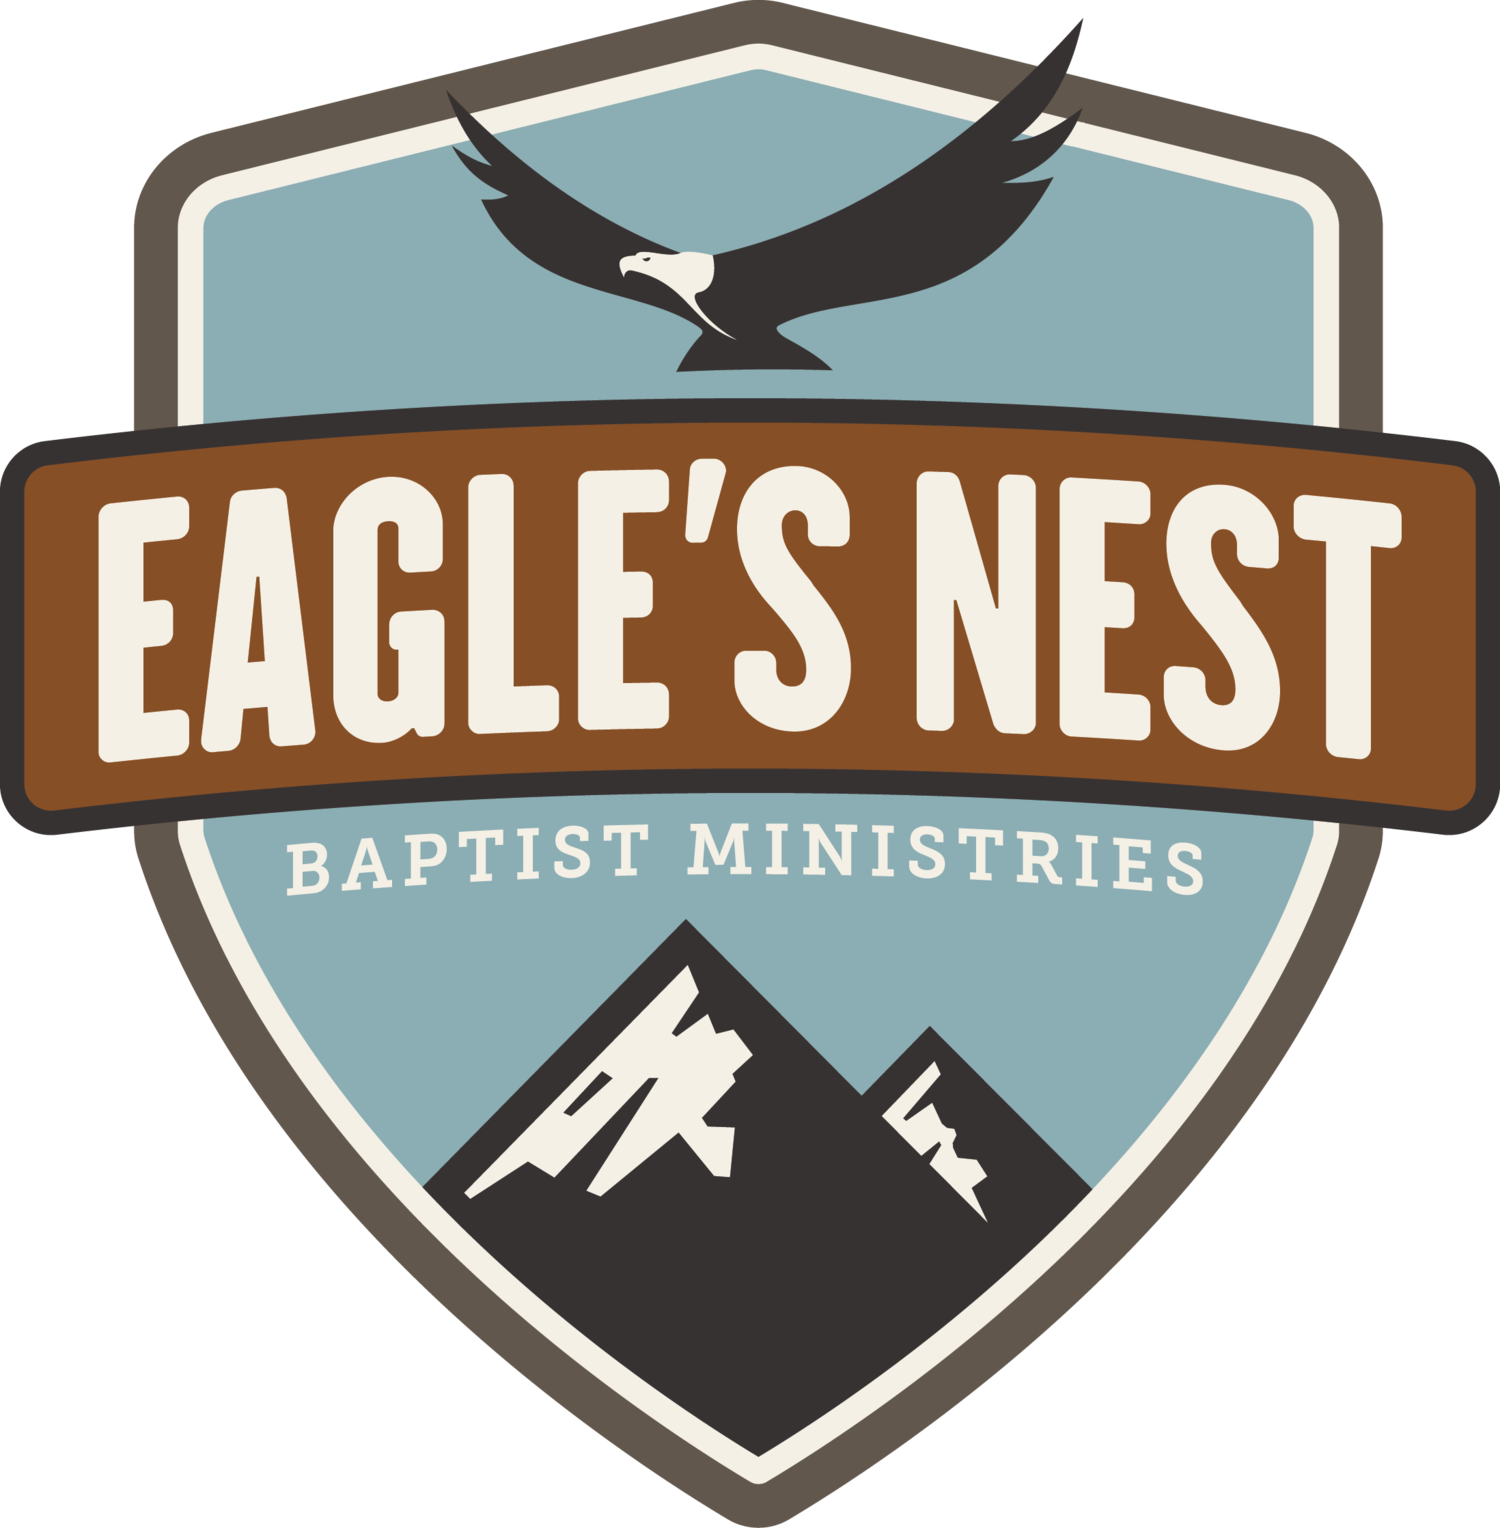 Eagle's Nest Baptist Ministries